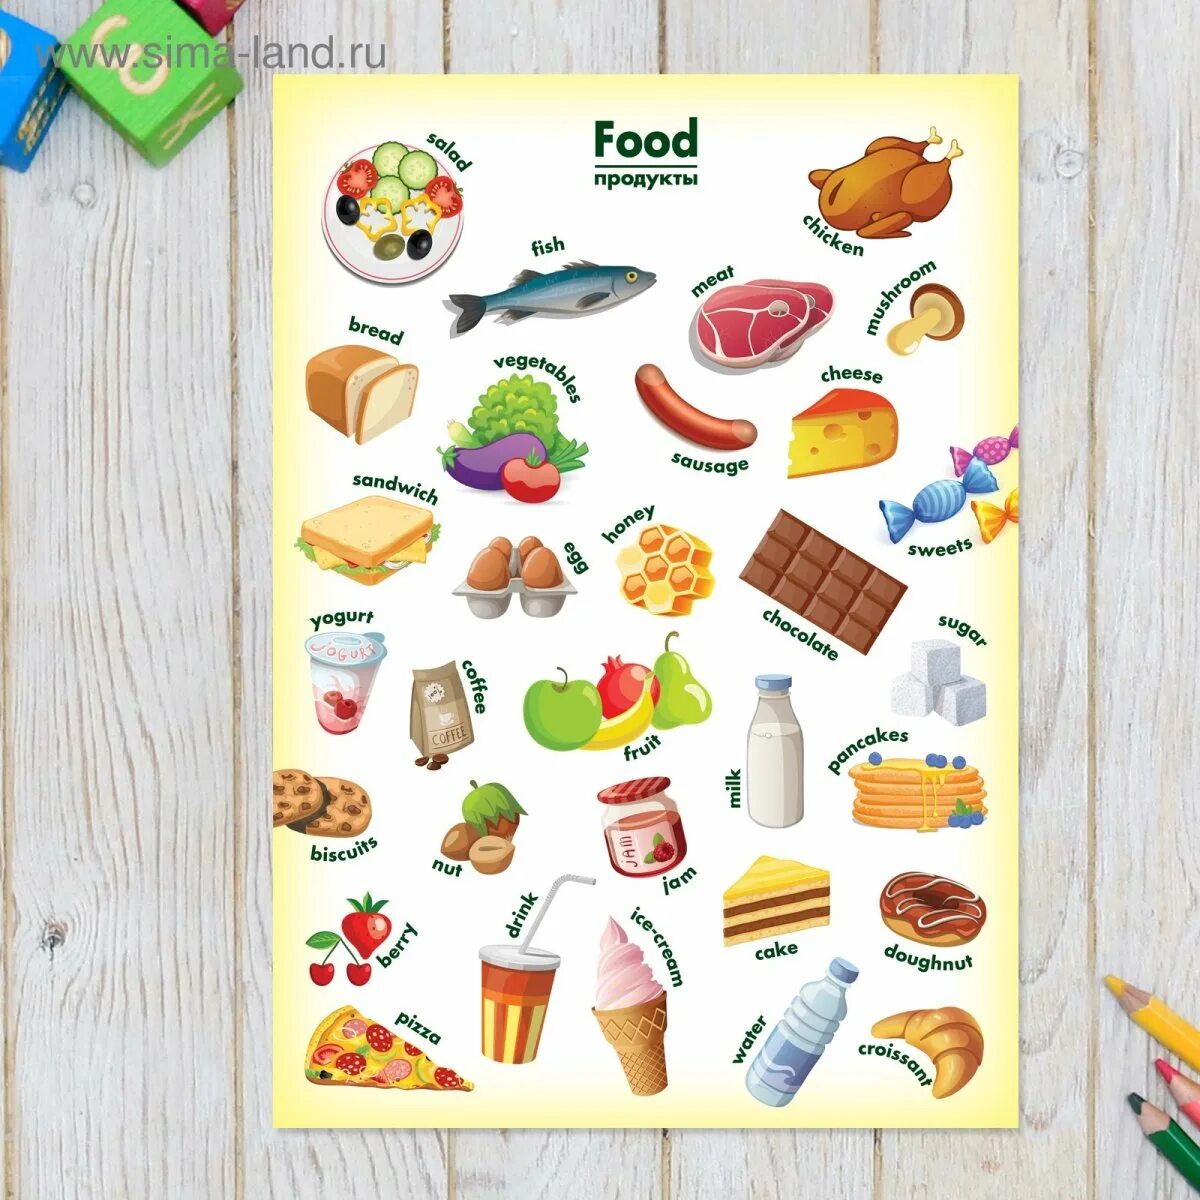 Карточки по теме еда. Карточки продуктов питания для детей. Продукты питания на английском. Карточки с продуктами на английском для детей.